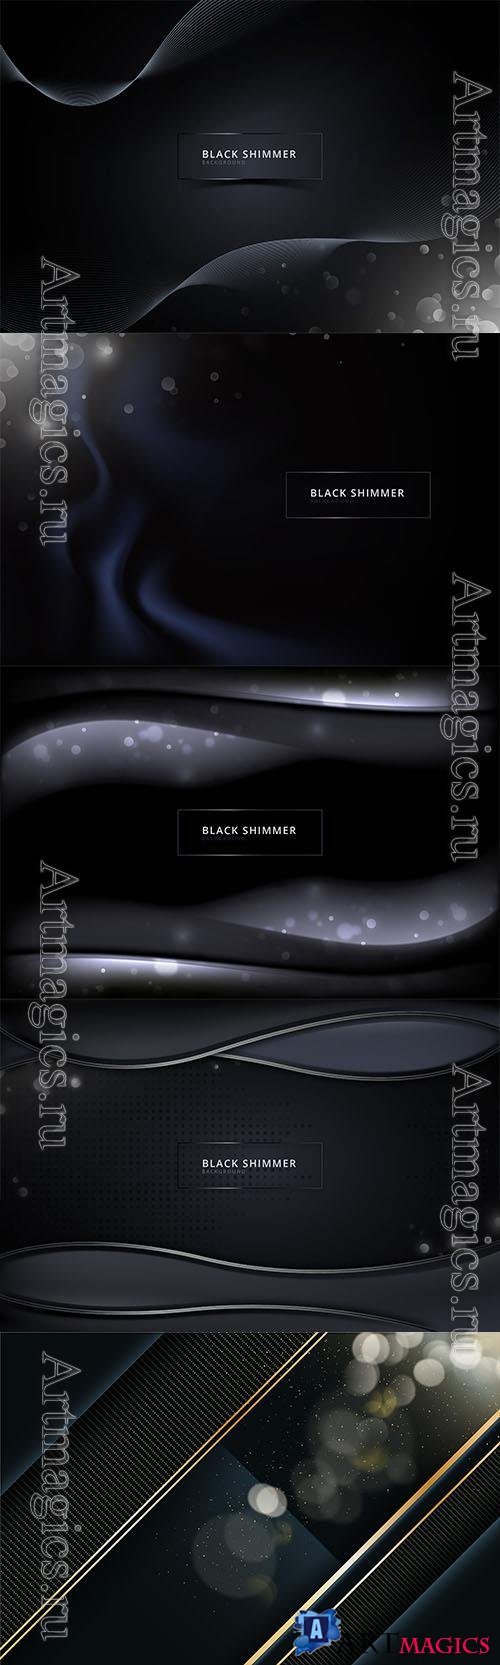 Vector realistic black shimmer background